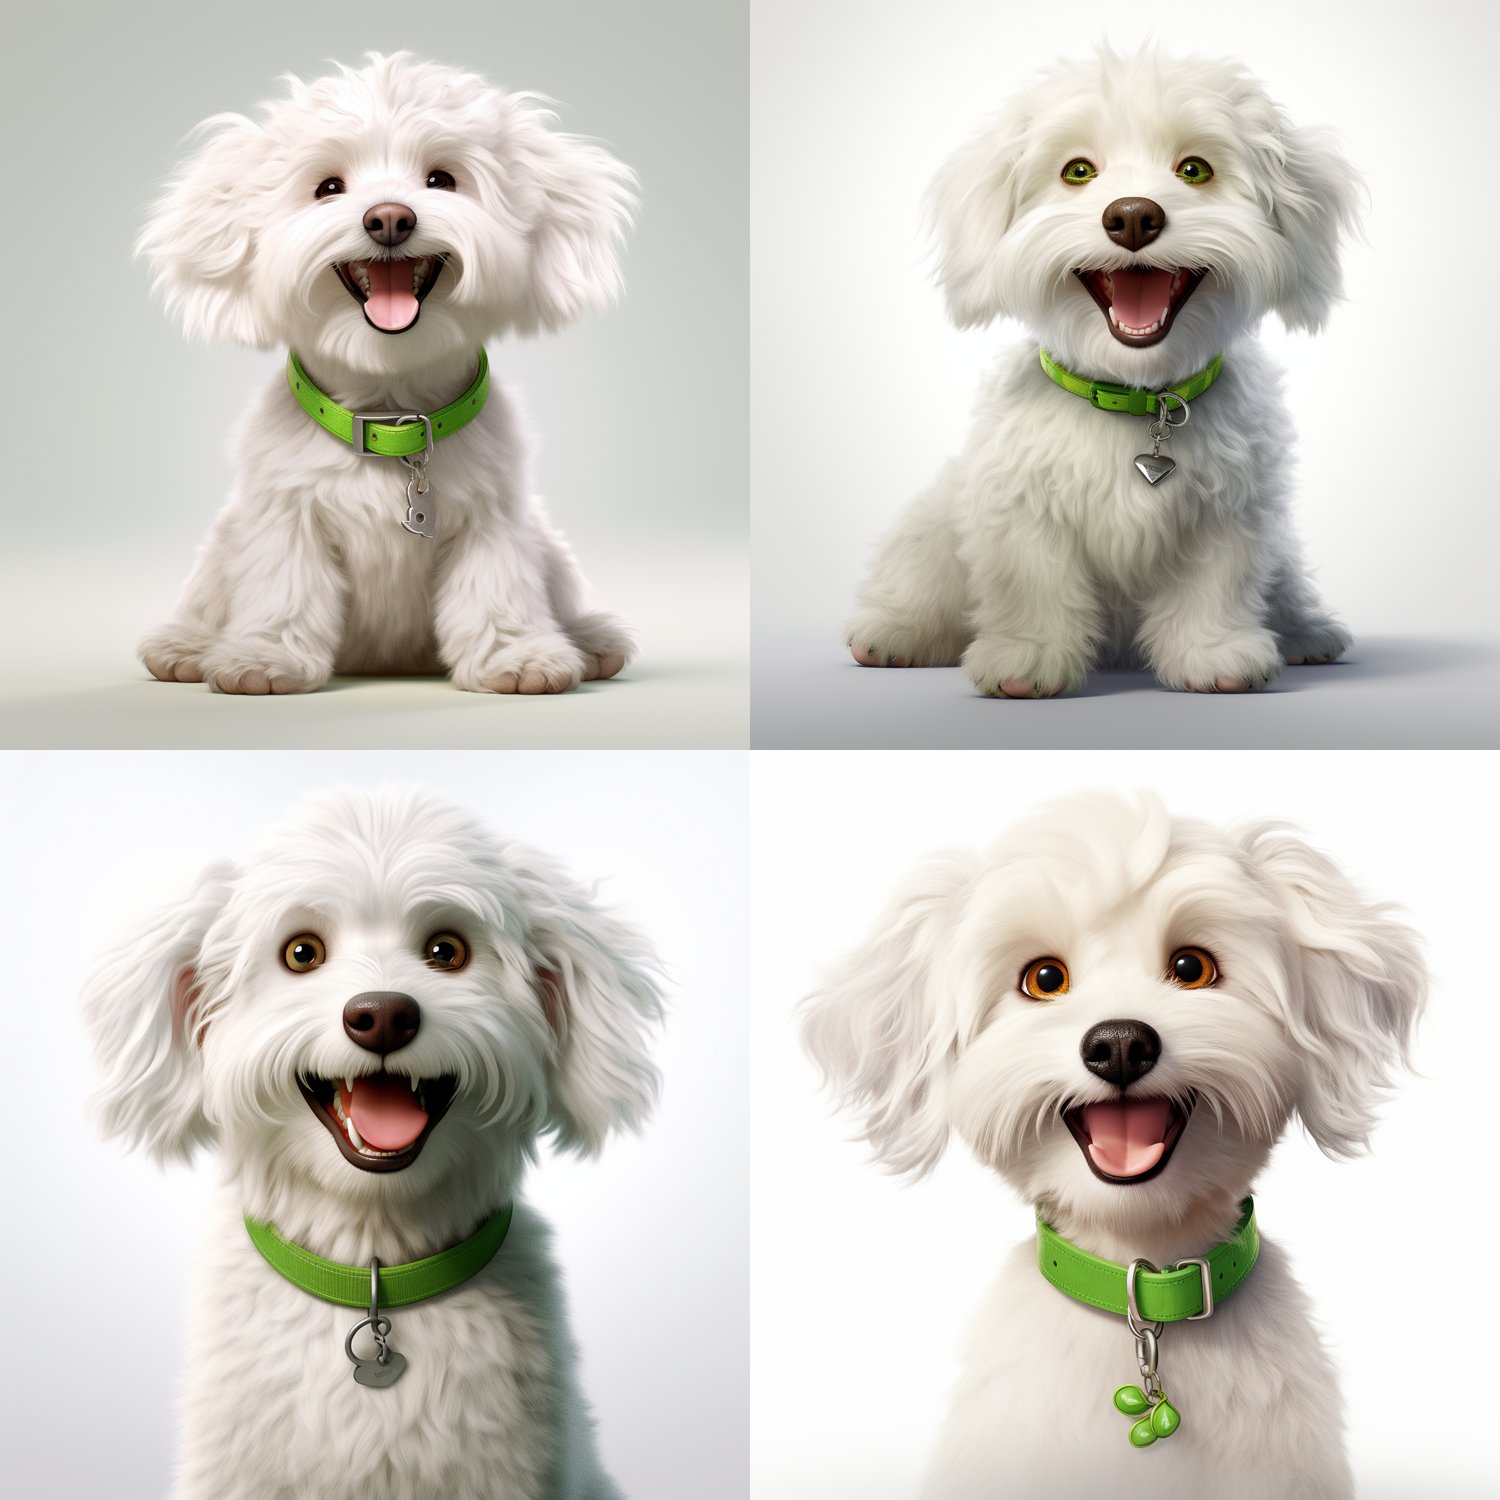 AI Rendering Of A Disney-like Maltese Poodle